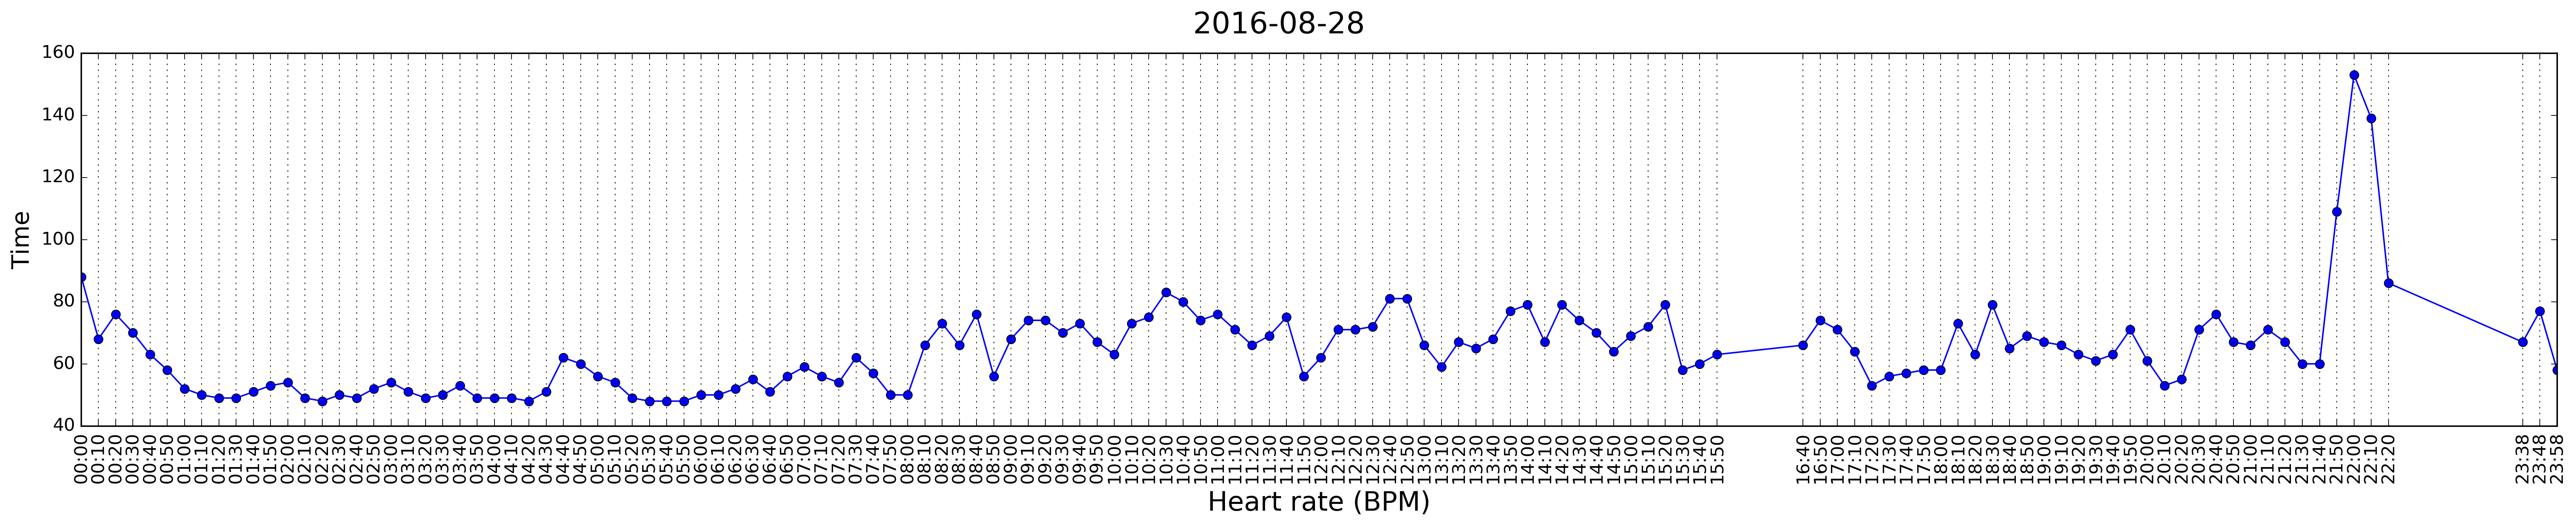 2016-08-28-heart